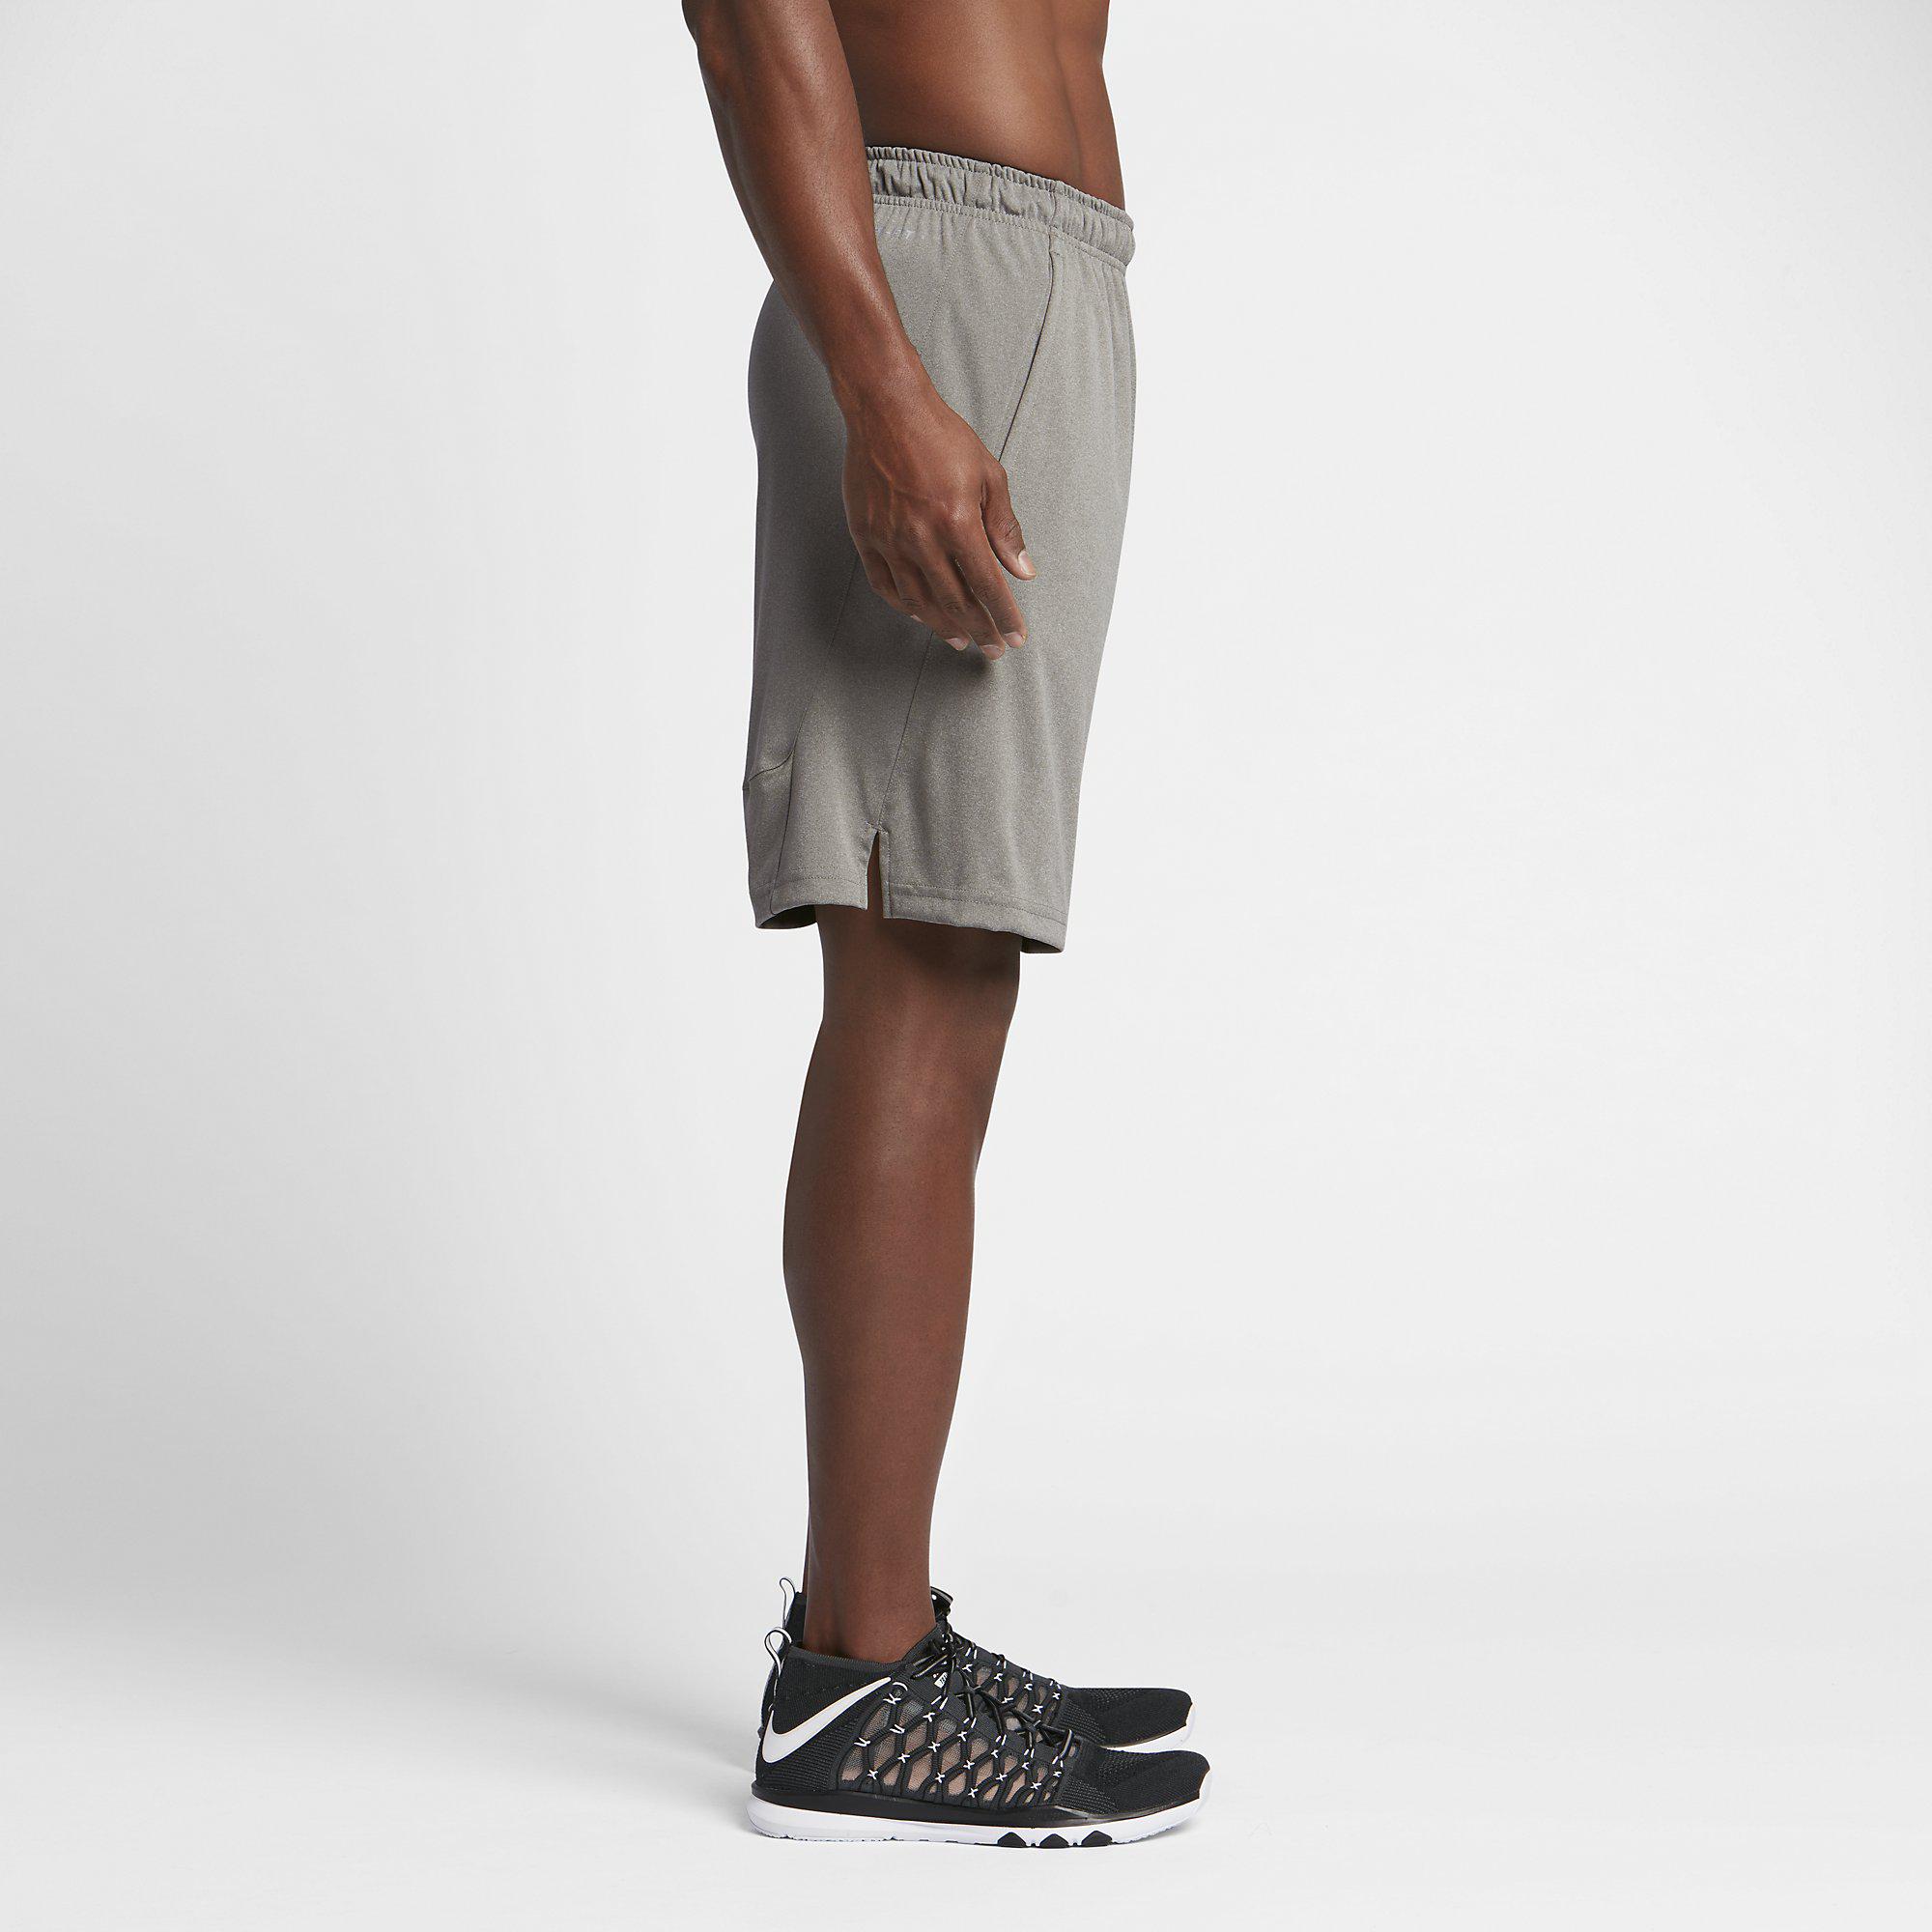 Nike Mens Dry Training Shorts - Dark Grey - Tennisnuts.com